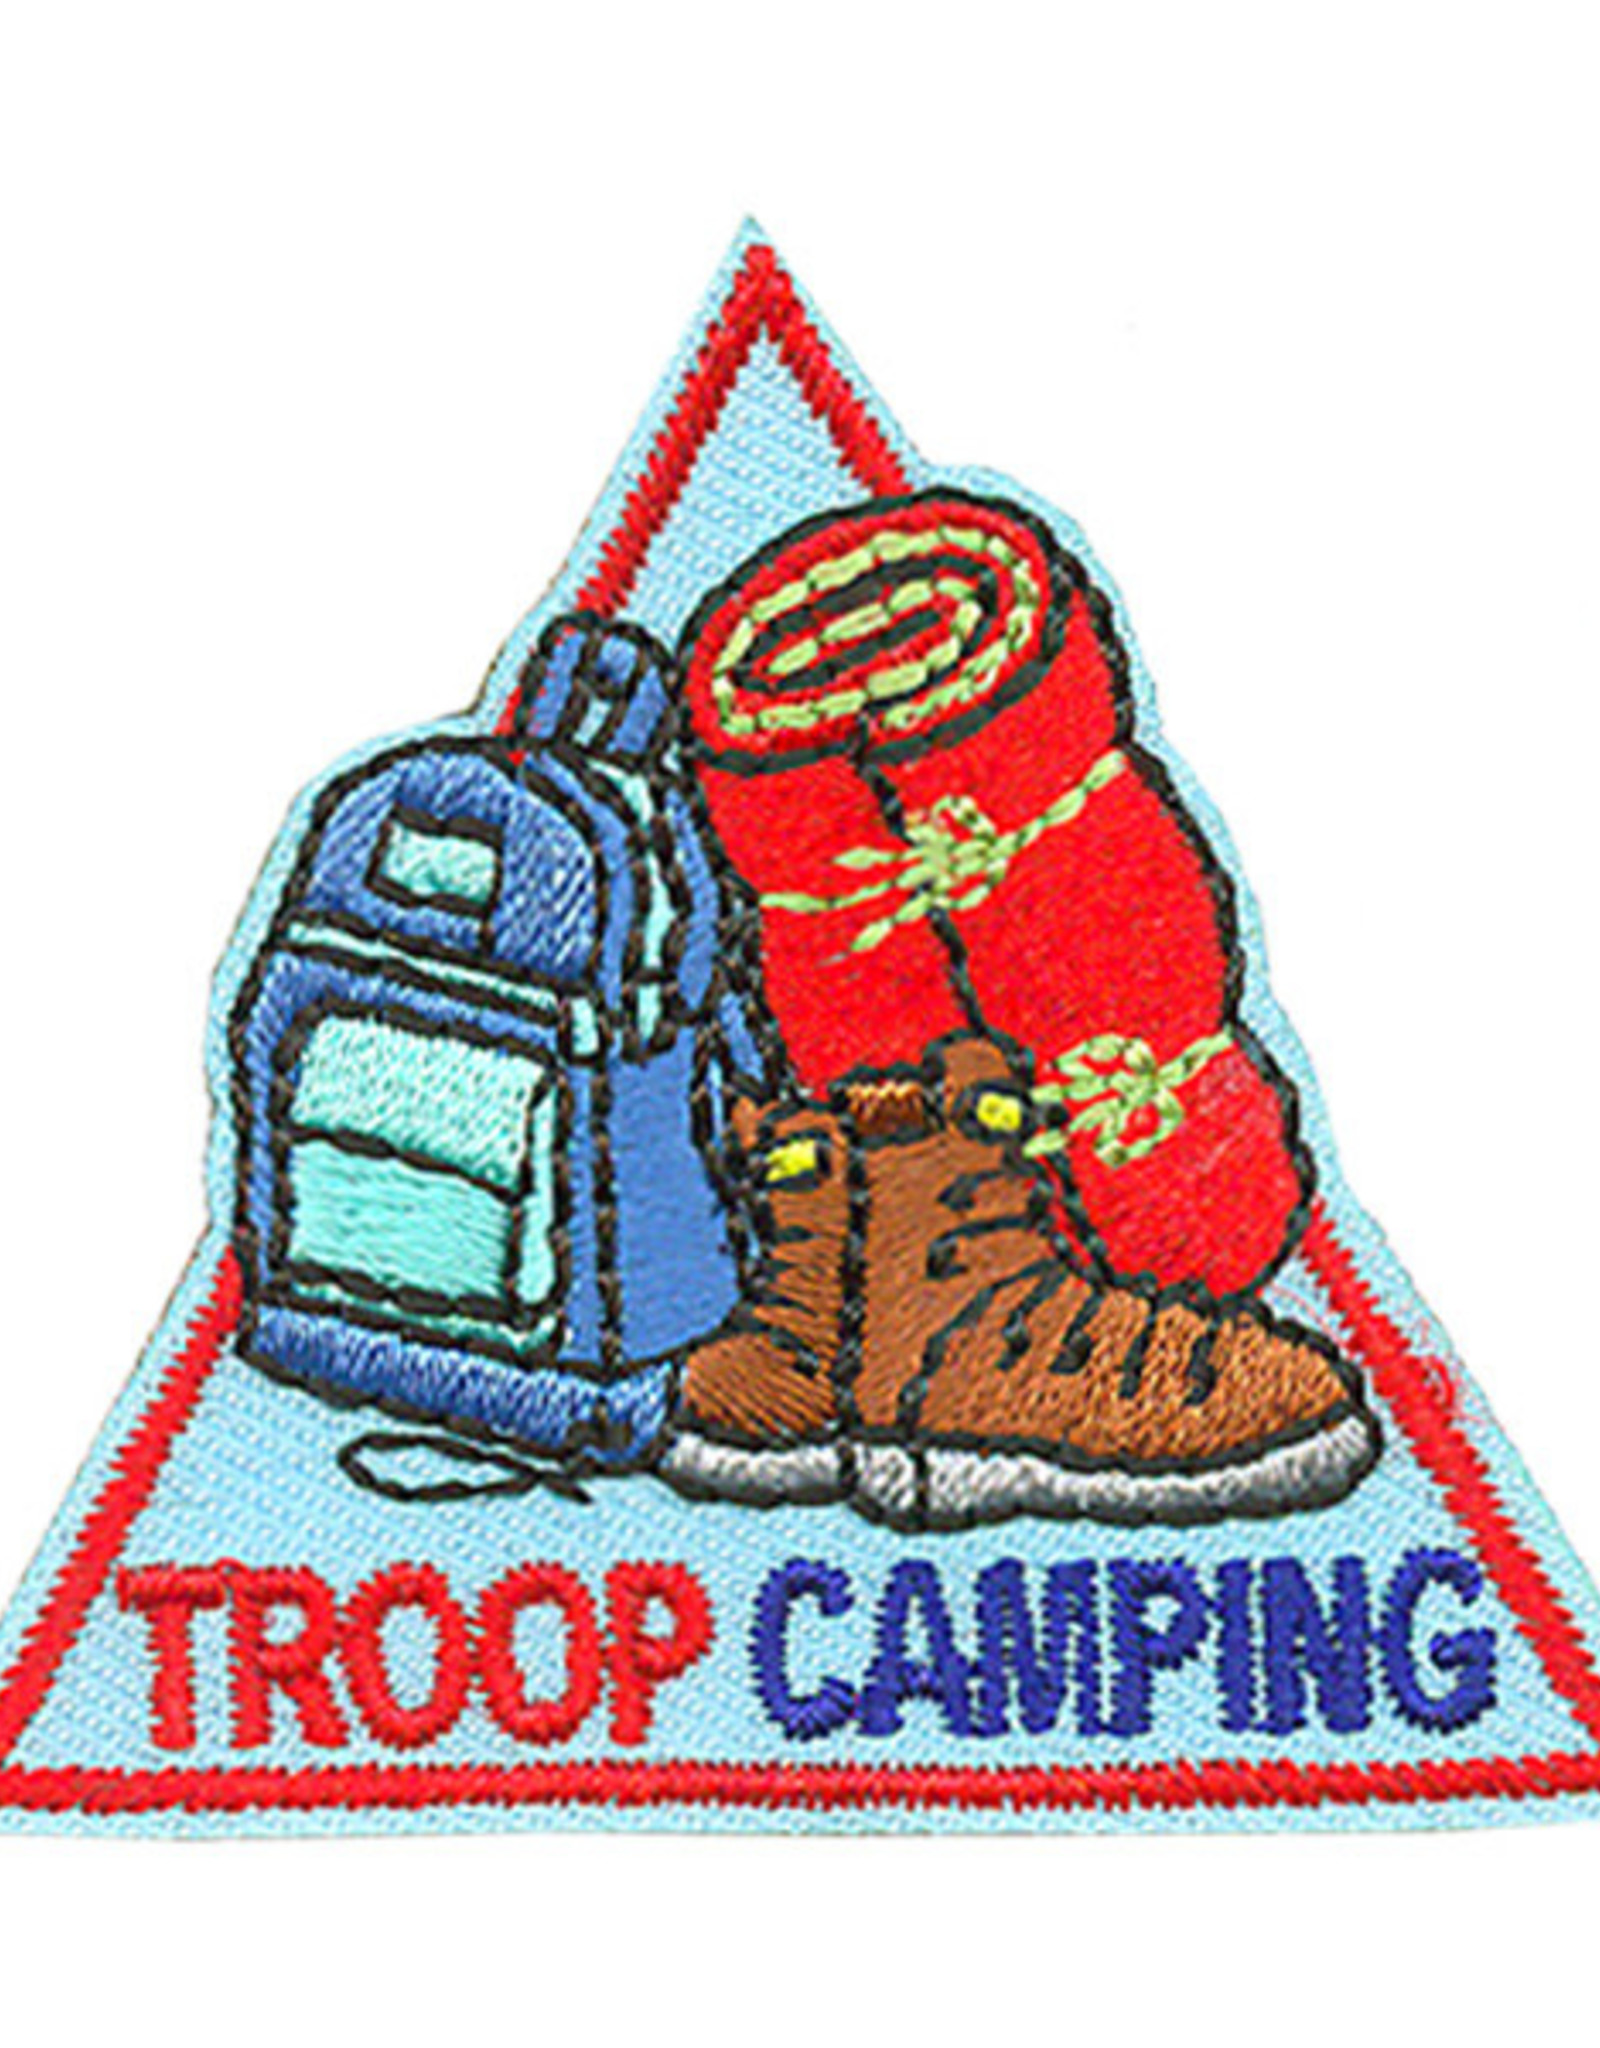 Advantage Emblem & Screen Prnt *Troop Camping Triangle Fun Patch